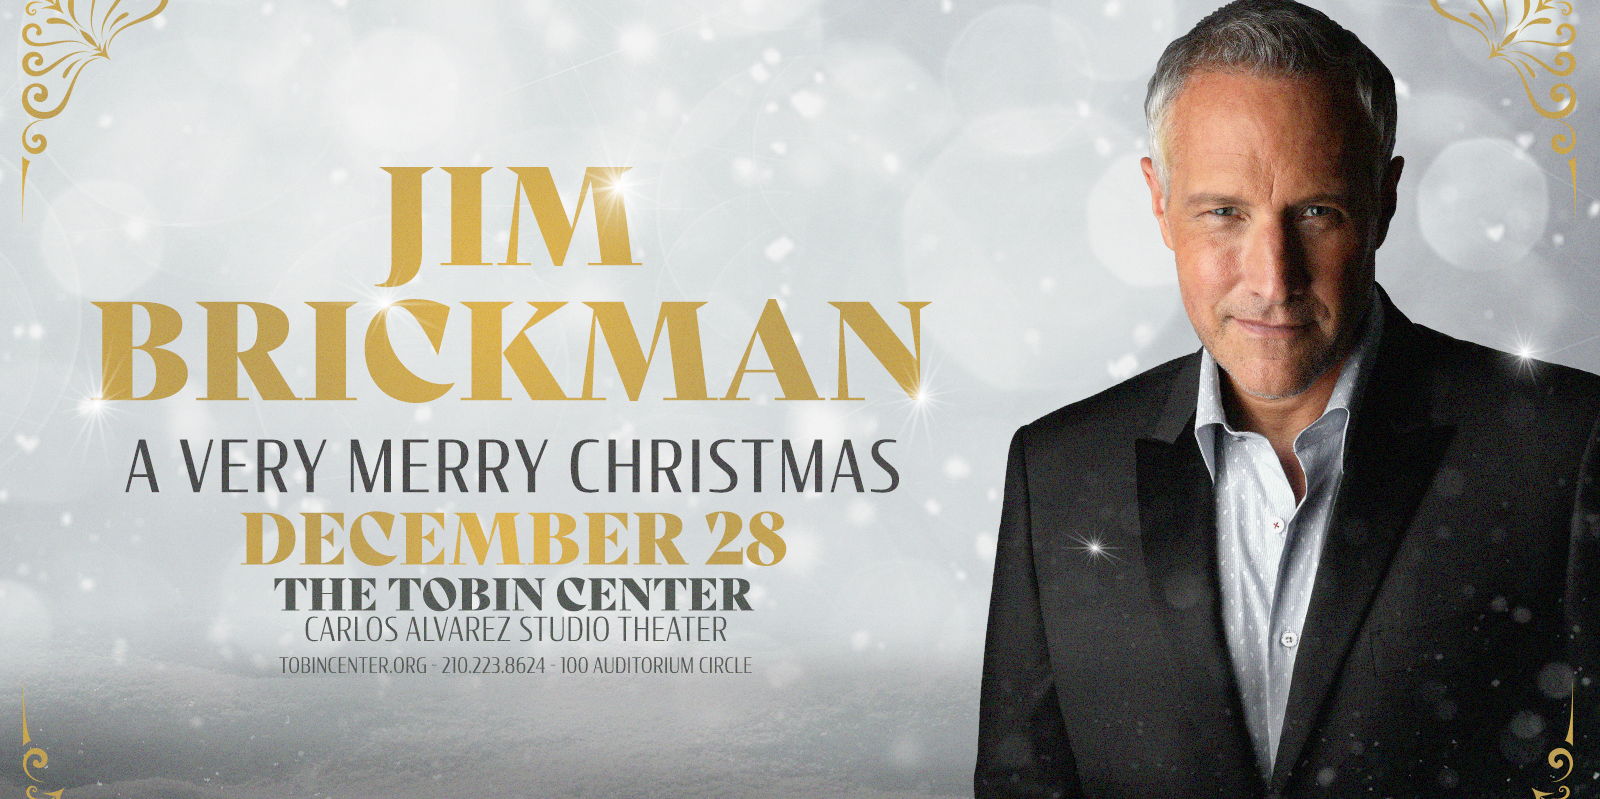 Jim Brickman promotional image